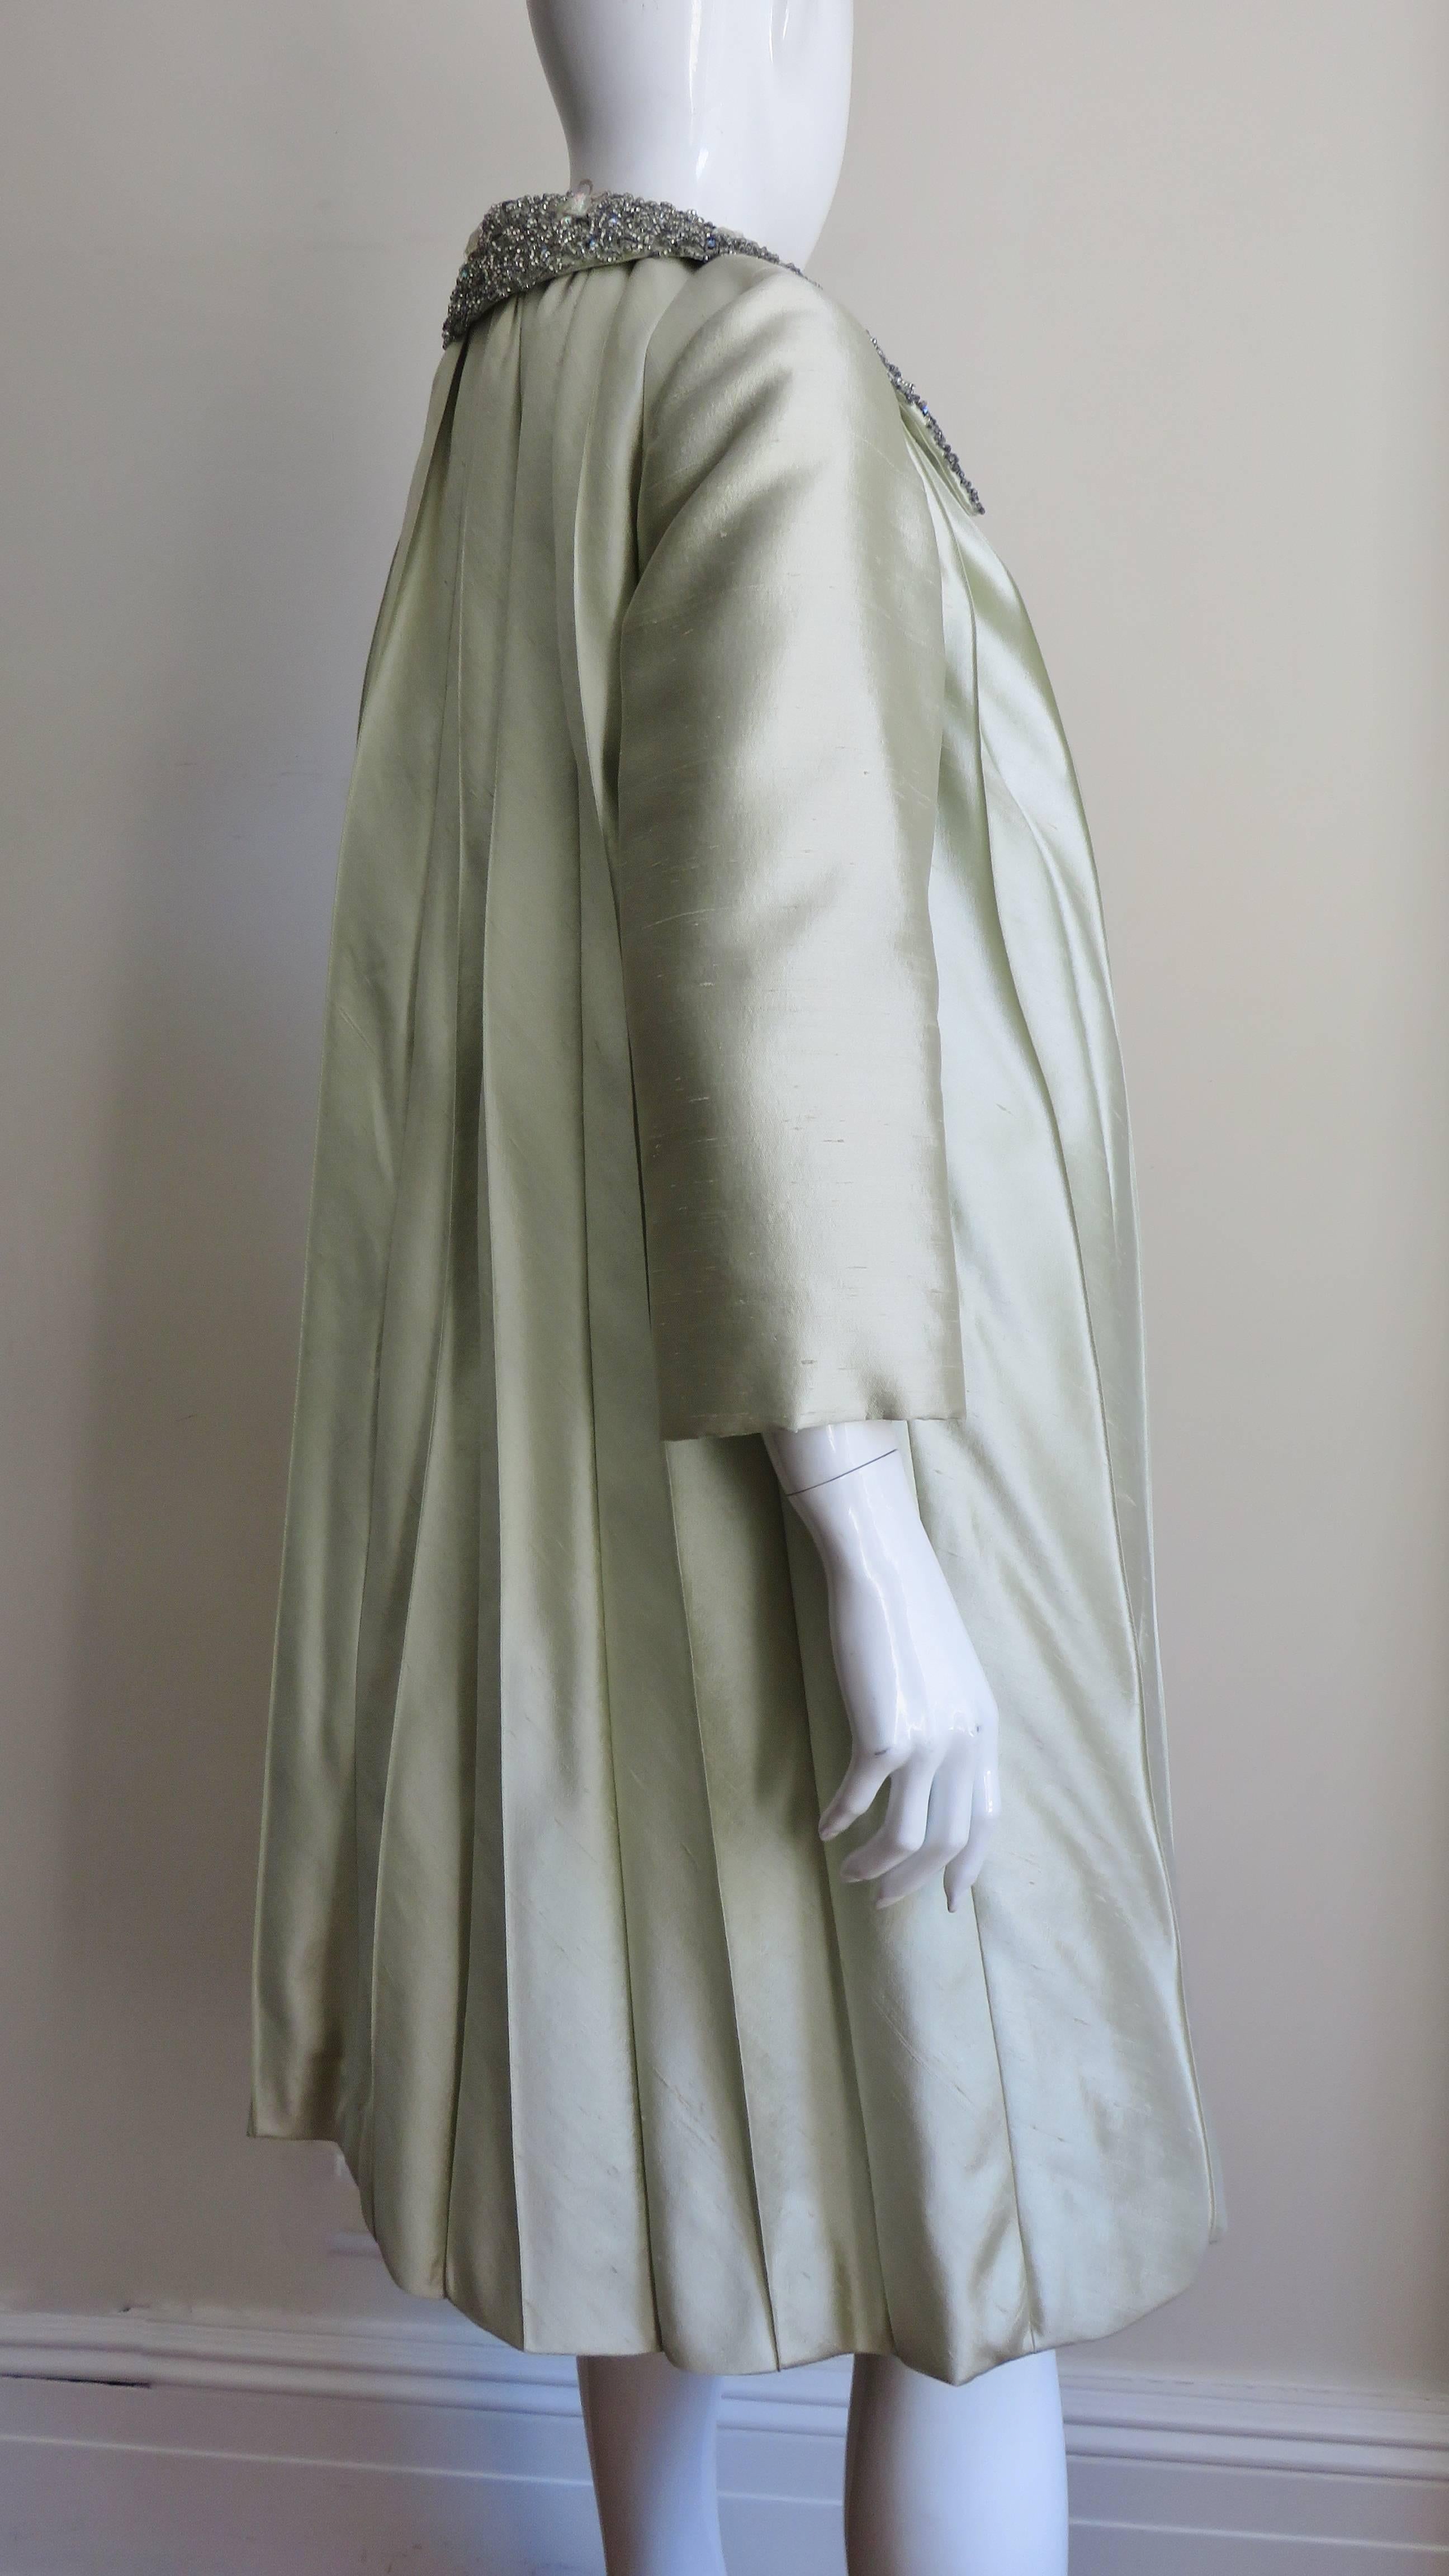  New Beaded Trim Dress and Coat Set 1960s 10